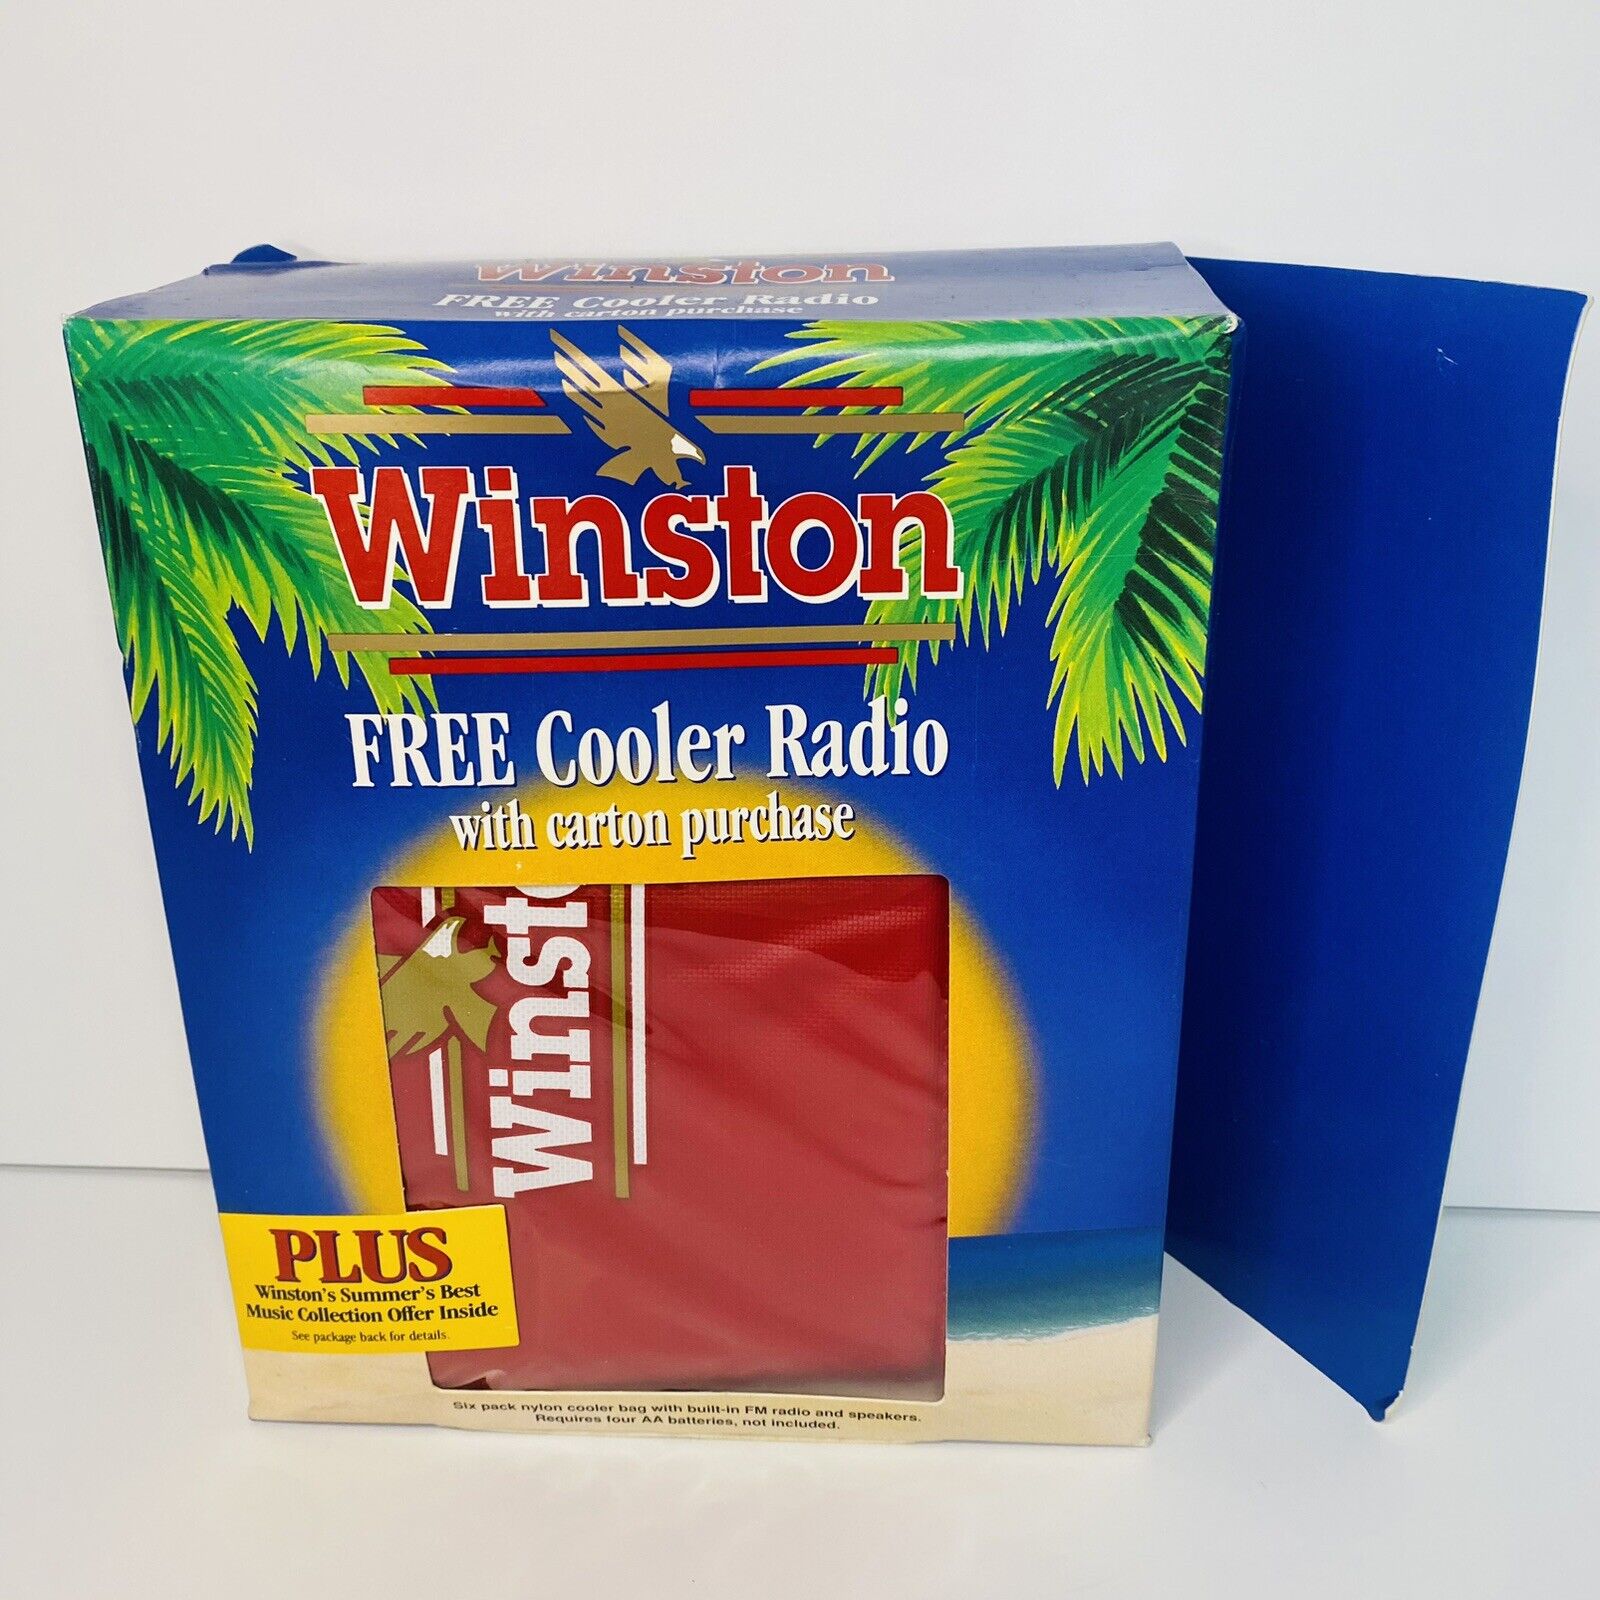 NEW WINSTON CIGARETTE FREE GIVE AWAY RADIO COOLER, SIX PACK NYLON COOLER K-041